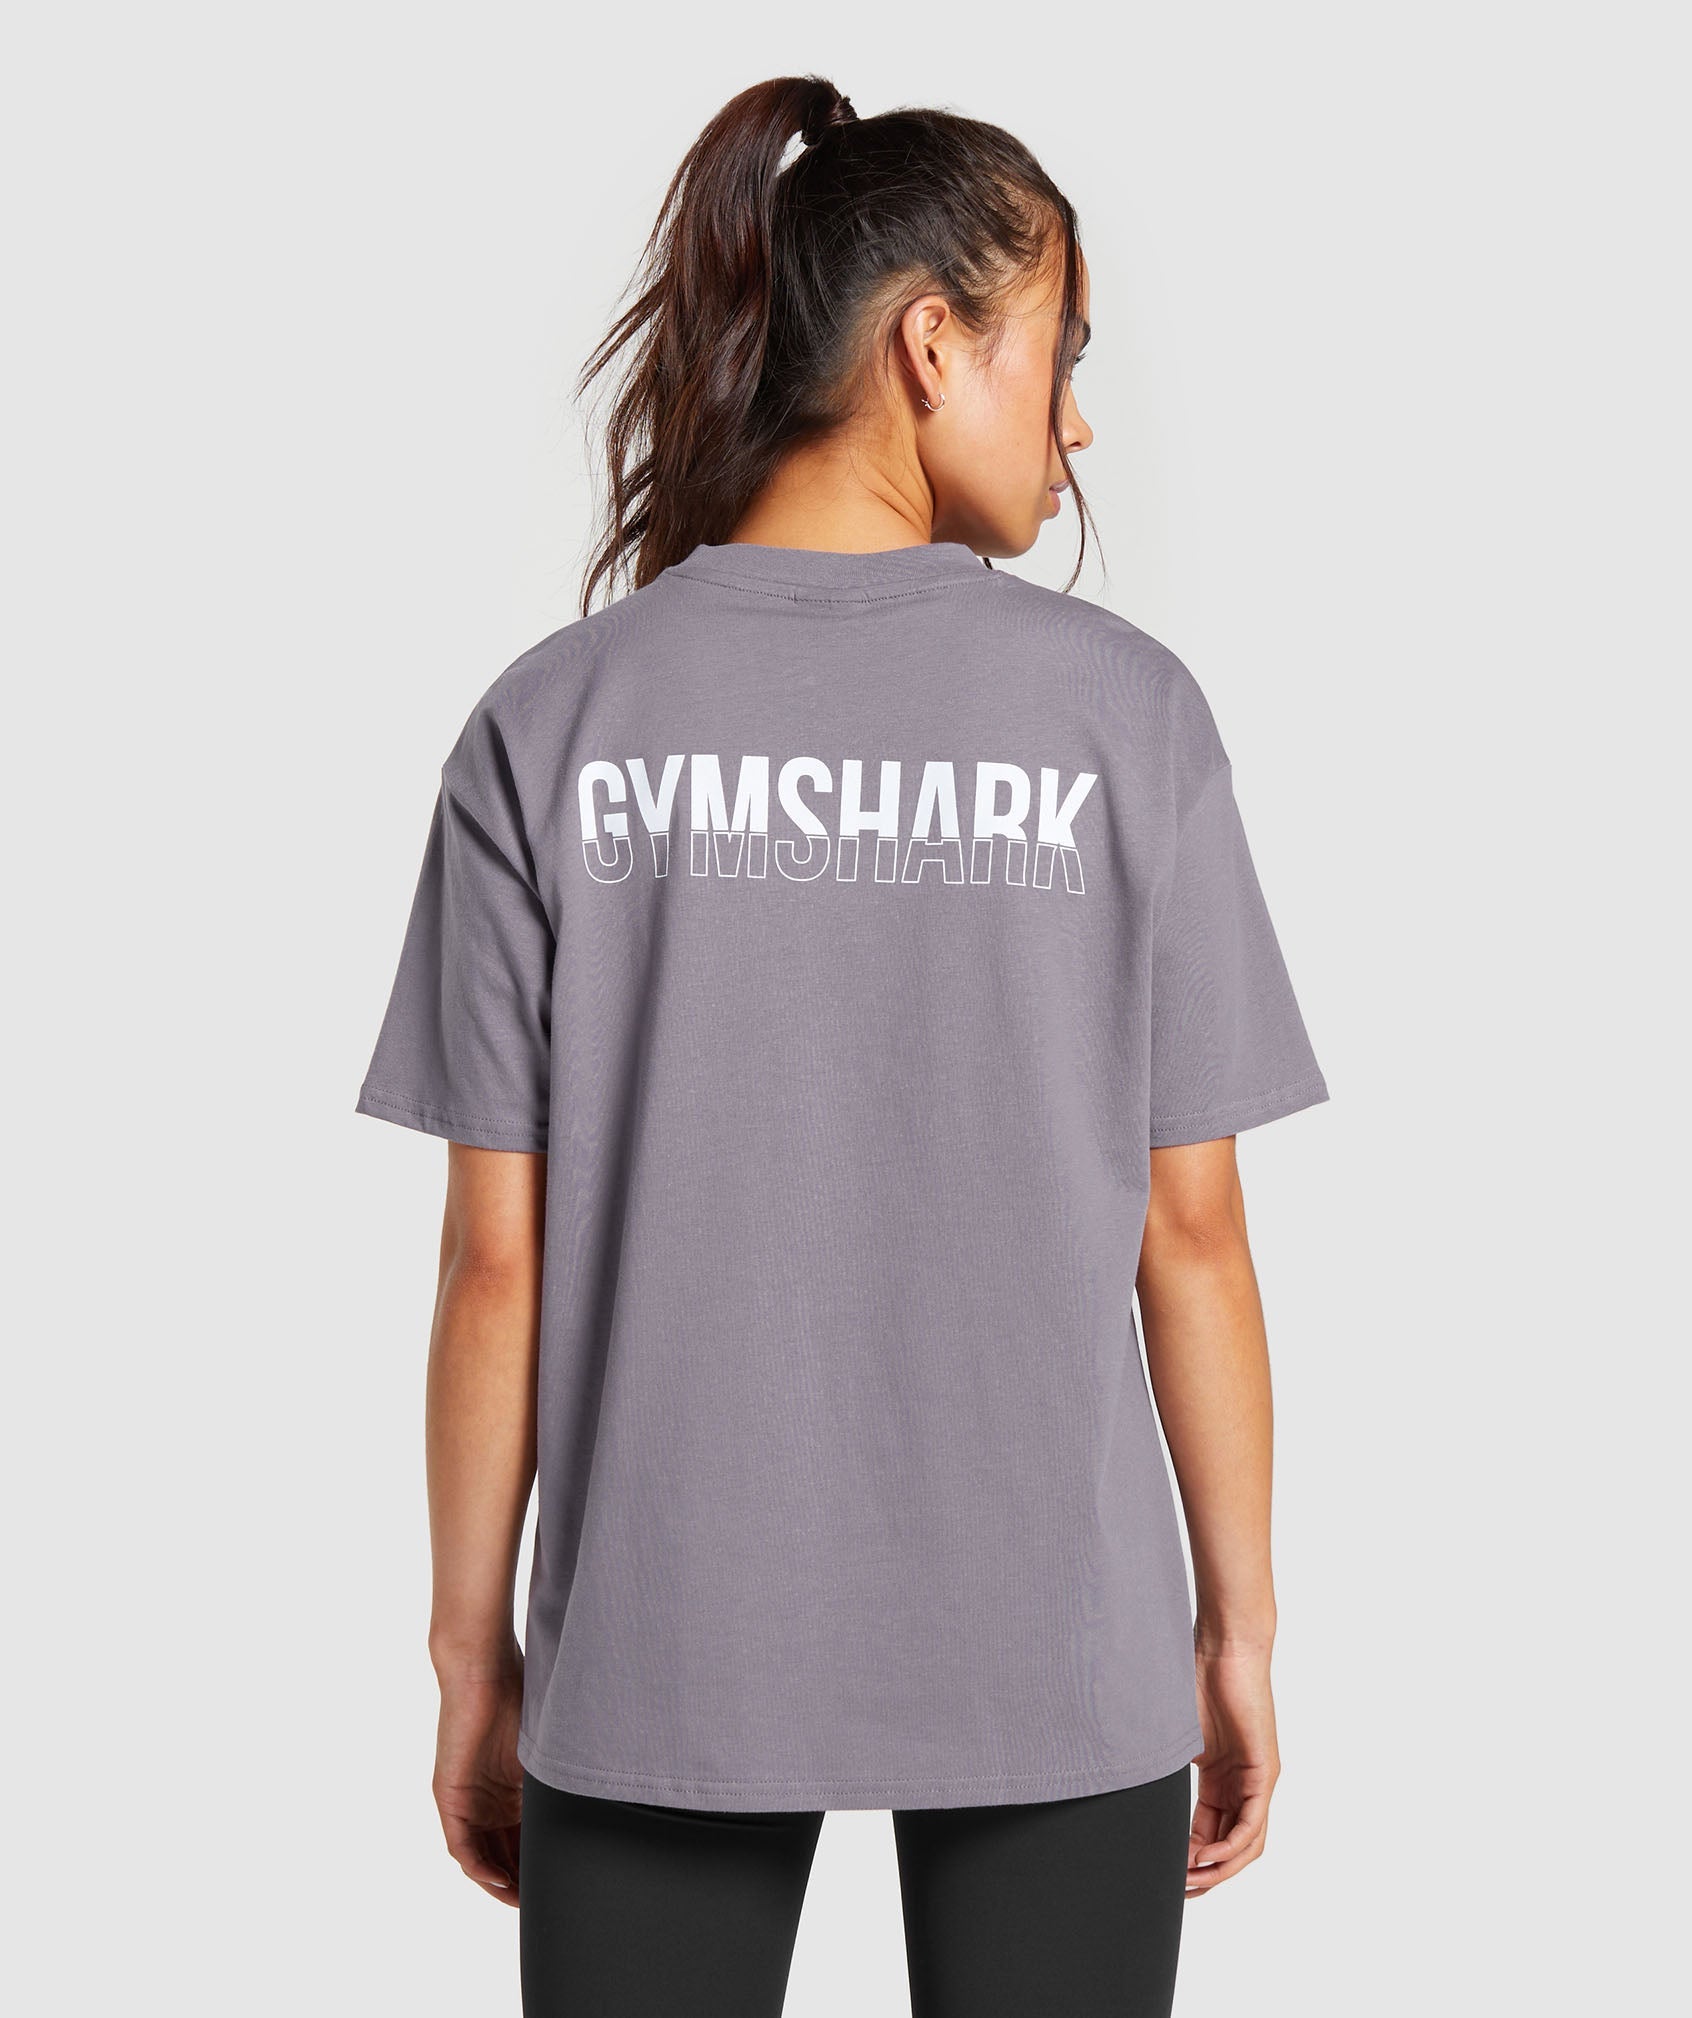 Gymshark Fraction Oversized T-Shirt - Comet Blue